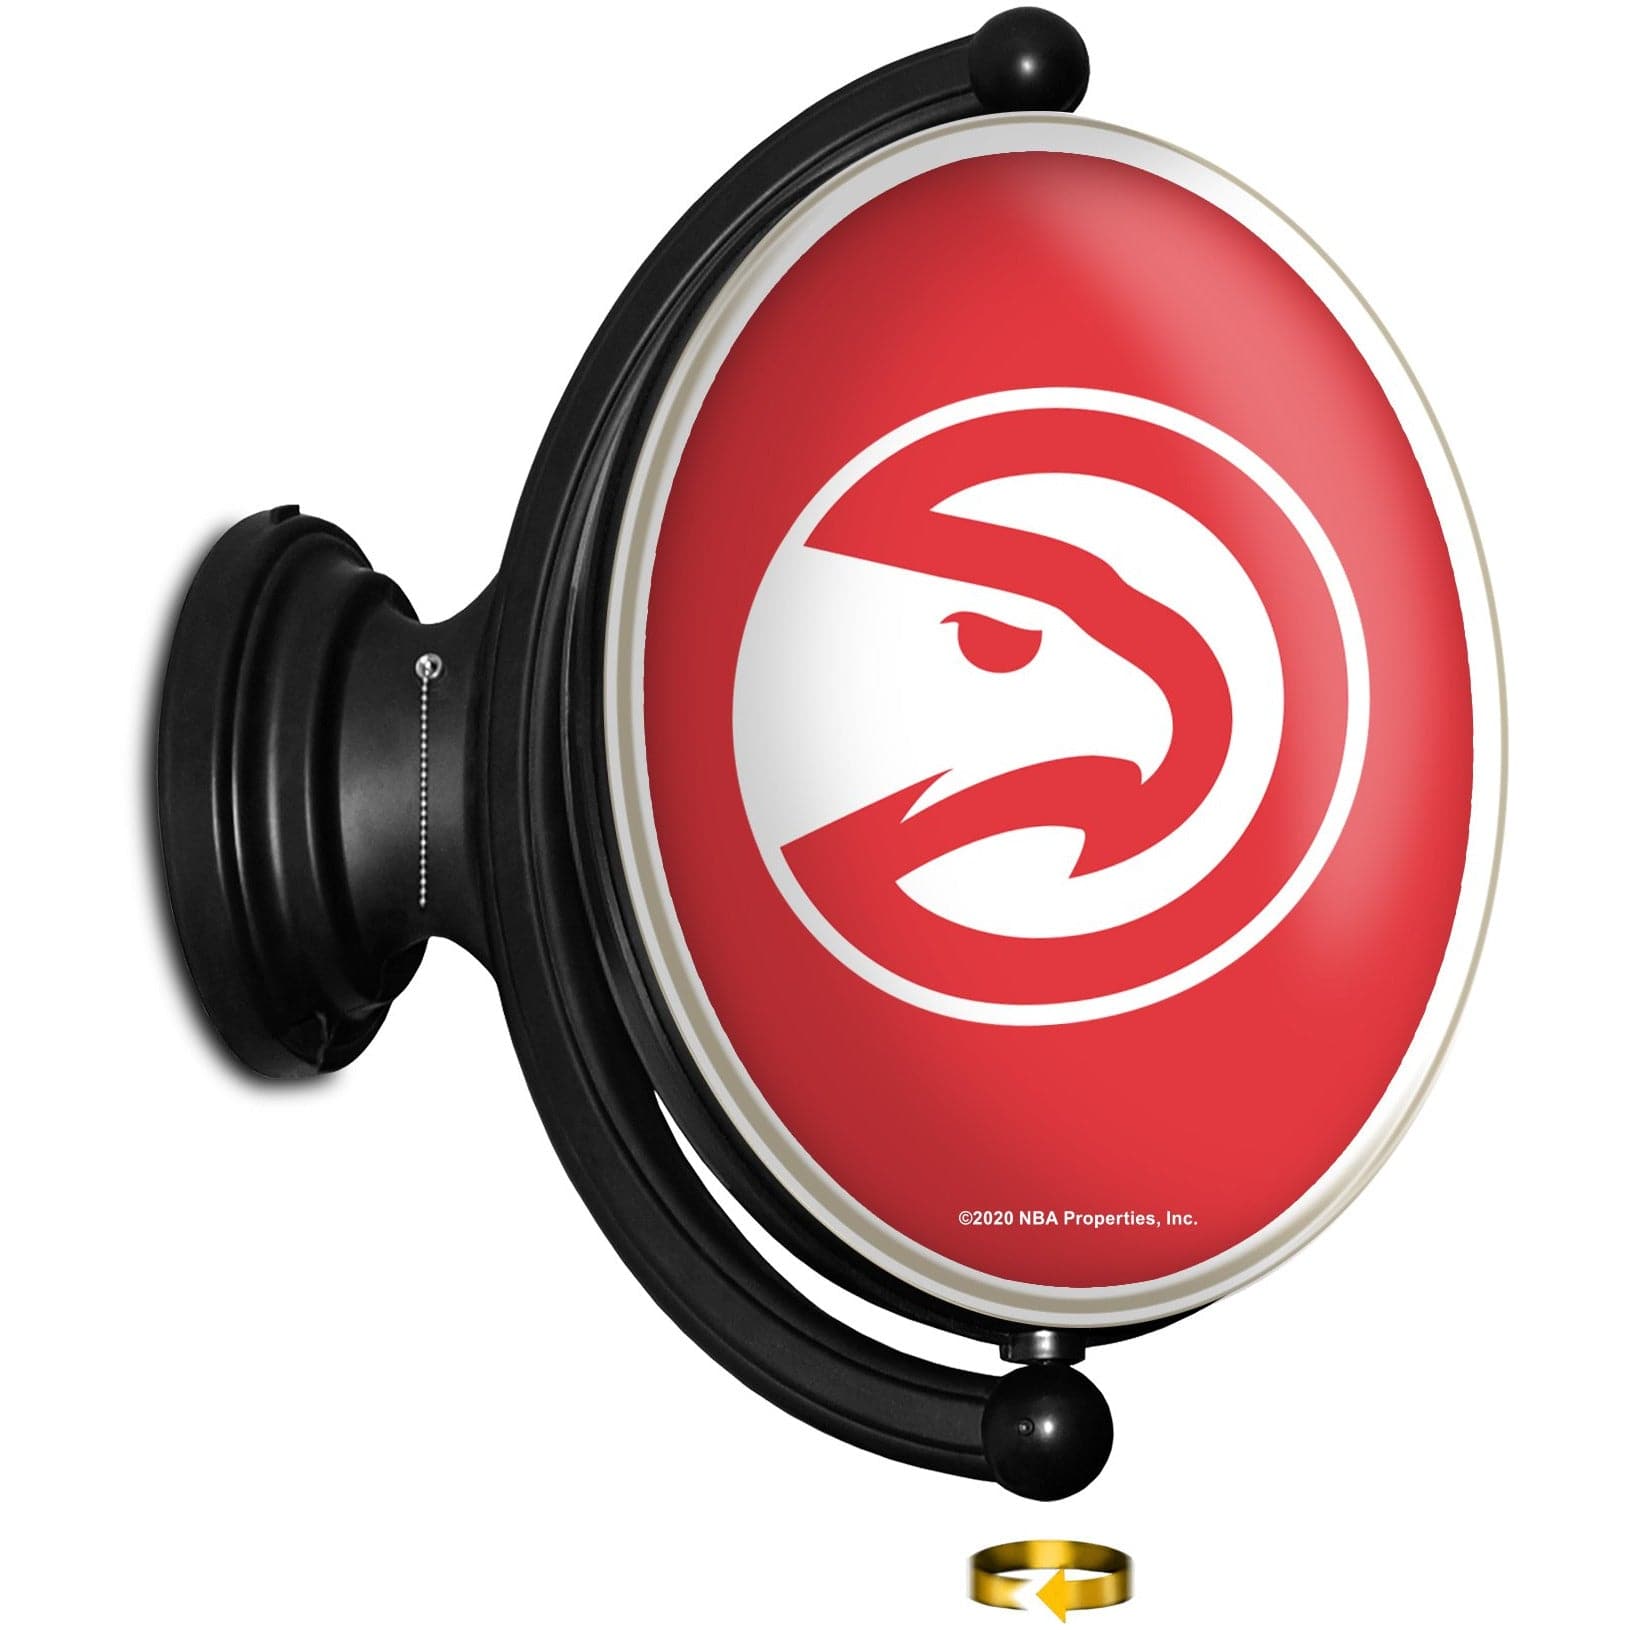 Atlanta Hawks: Original Oval Rotating Lighted Wall Sign - The Fan-Brand